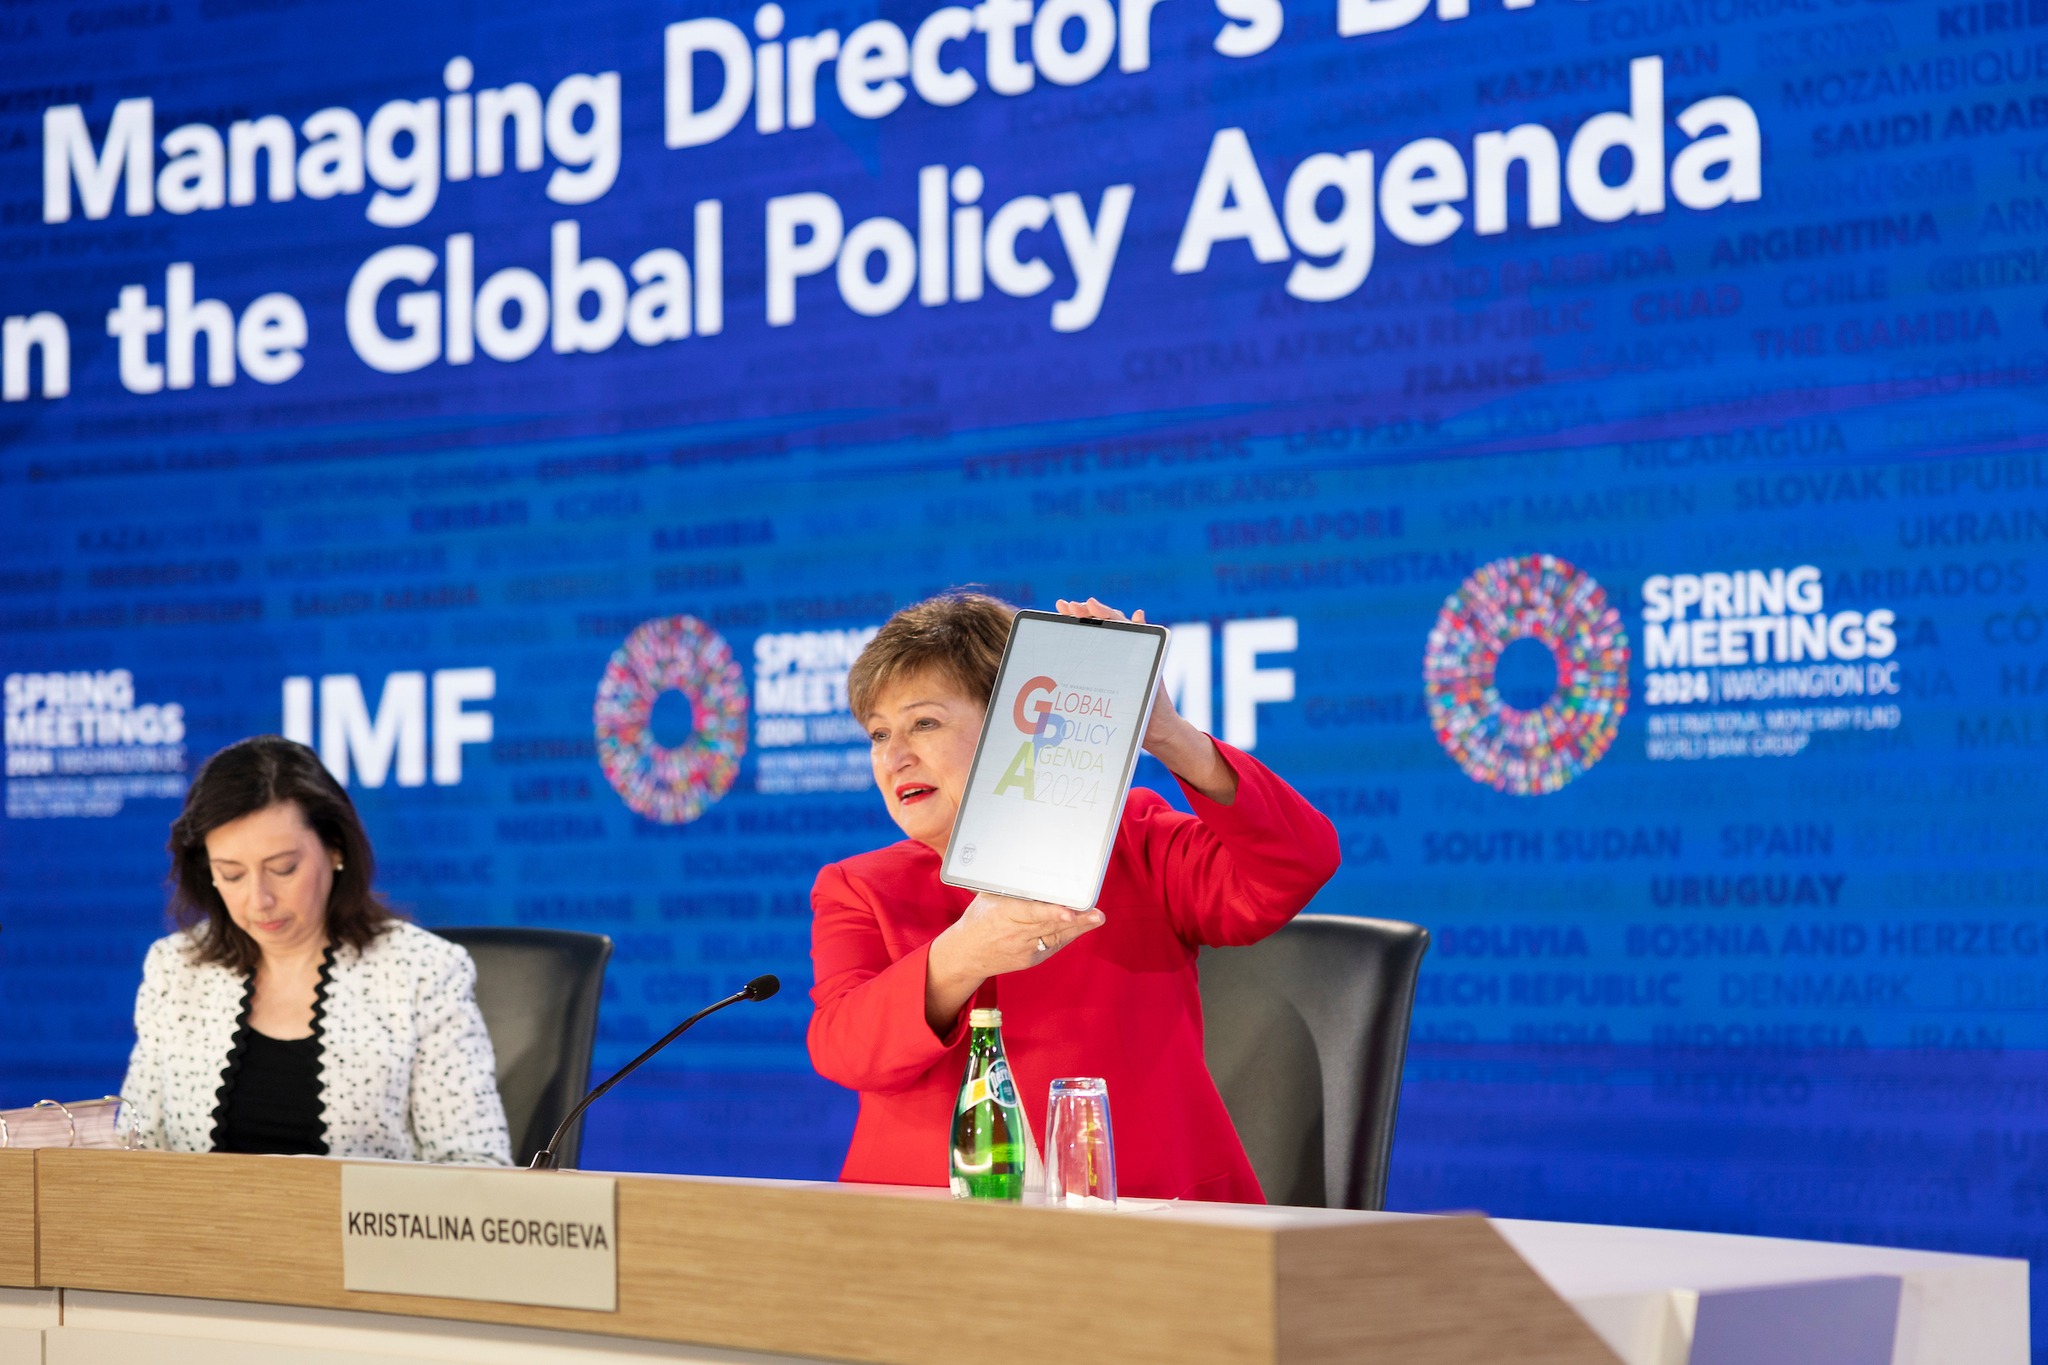 Budget 2024 : le FMI communique ses recommandations à la France